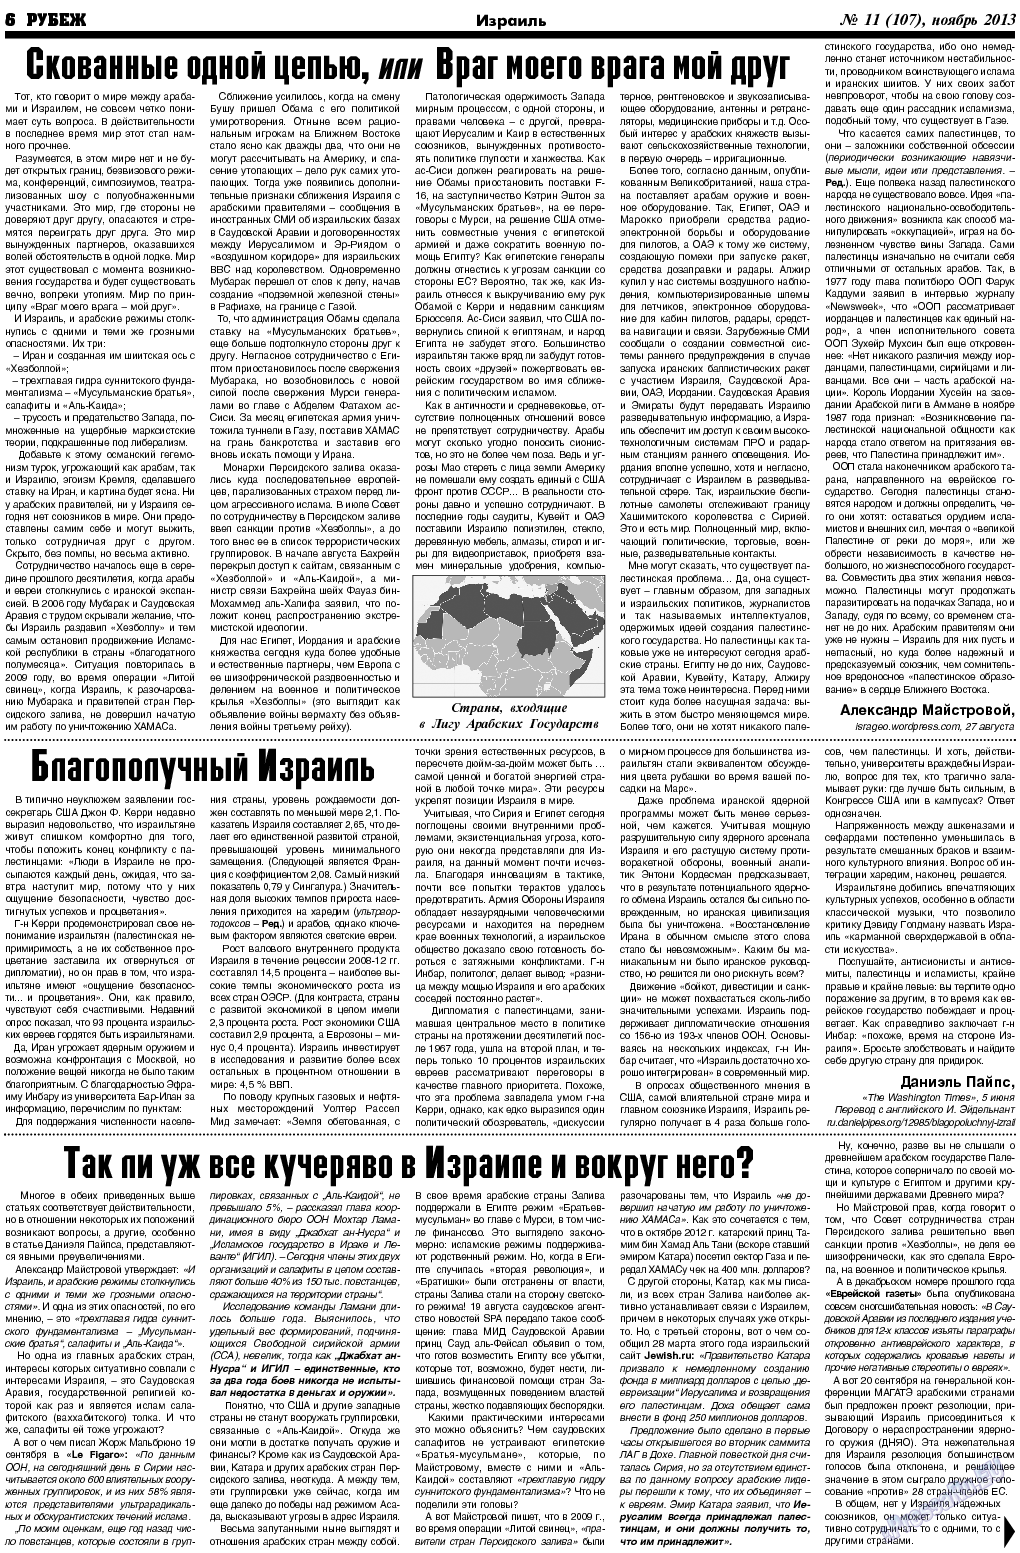 Рубеж, газета. 2013 №11 стр.6